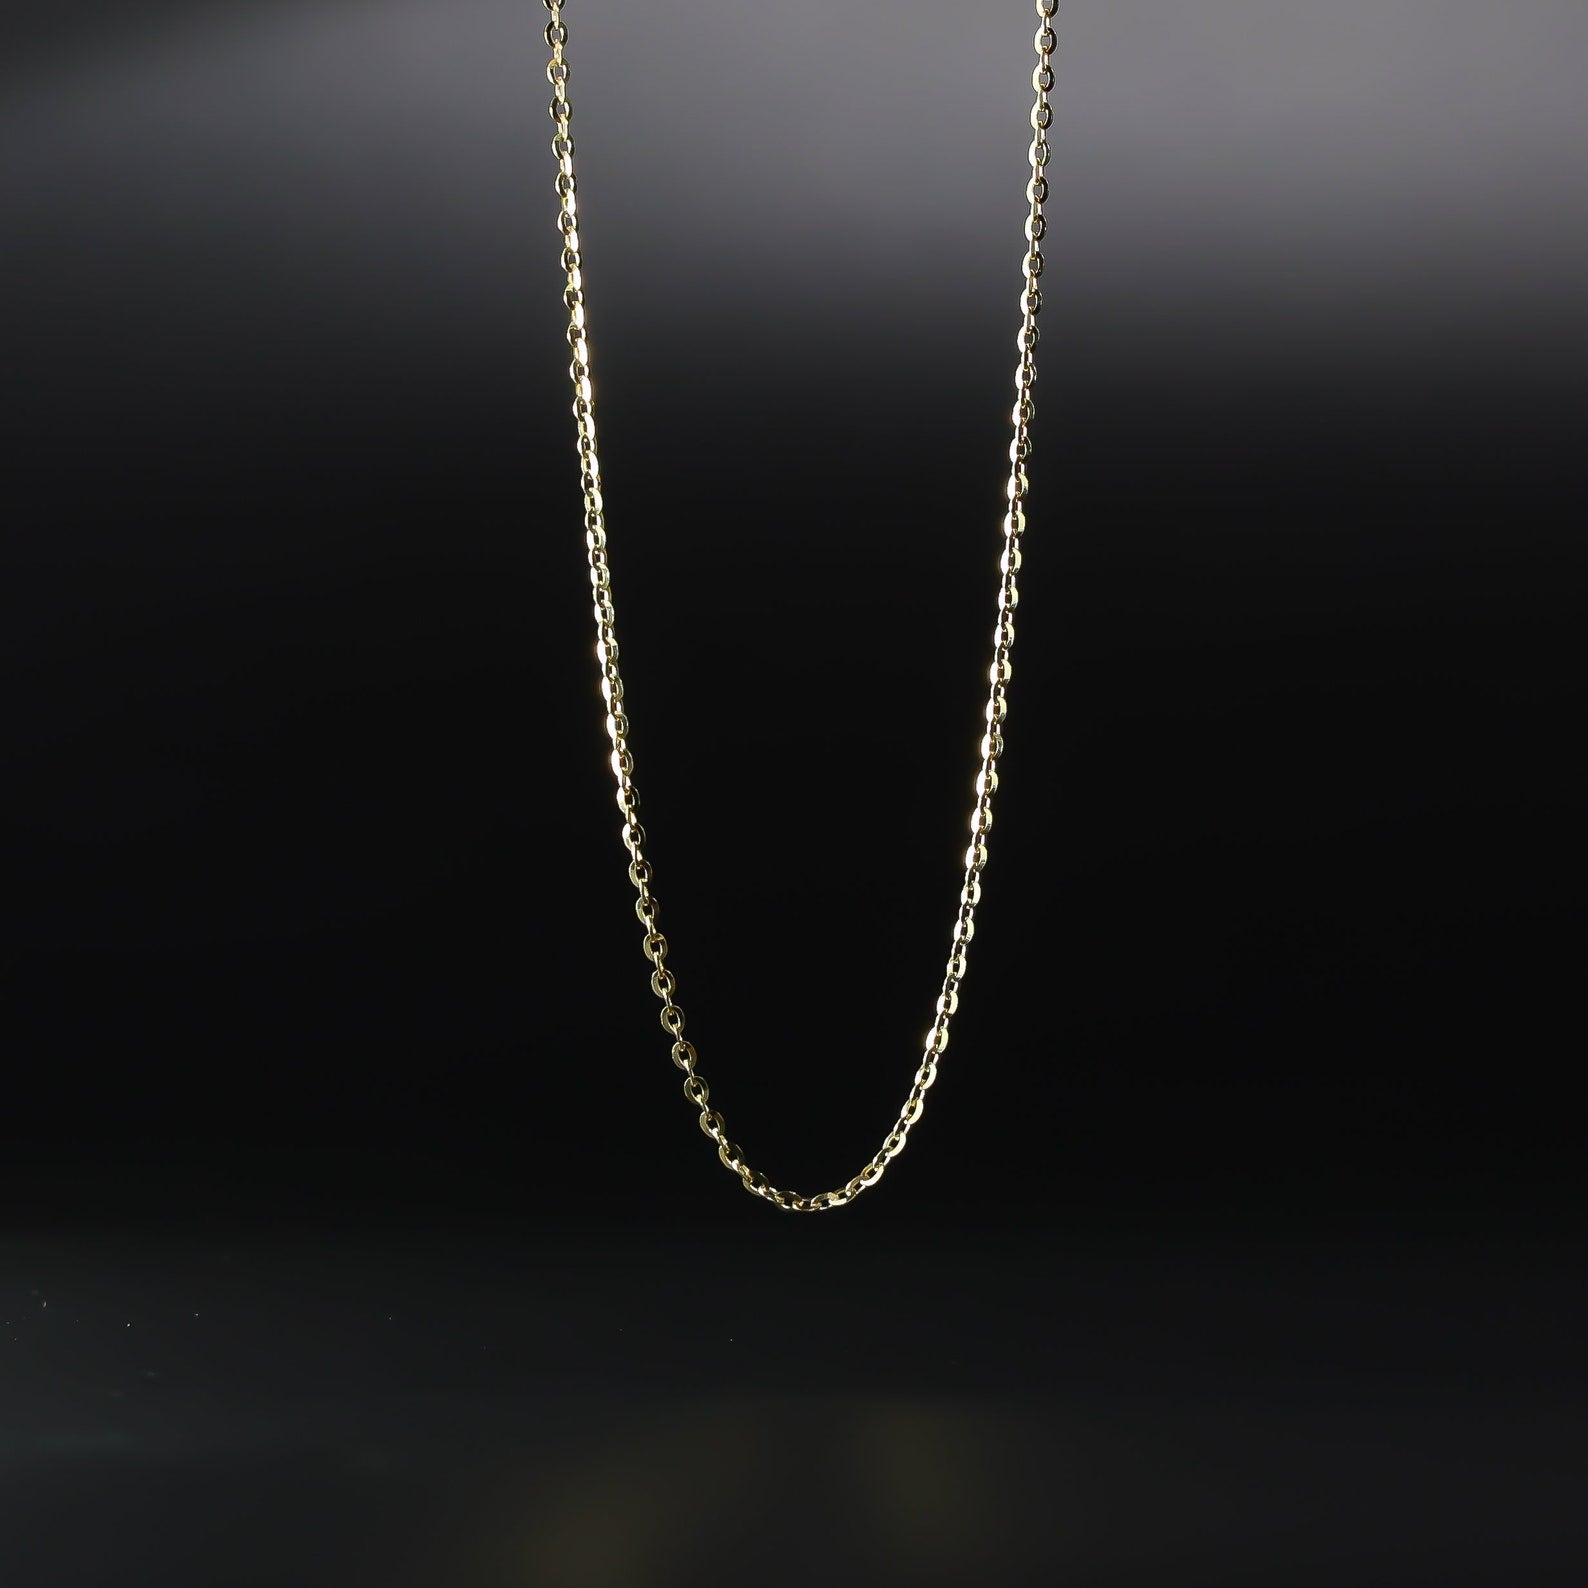 Gold Open Heart CZ Pendant Model-585 - Charlie & Co. Jewelry